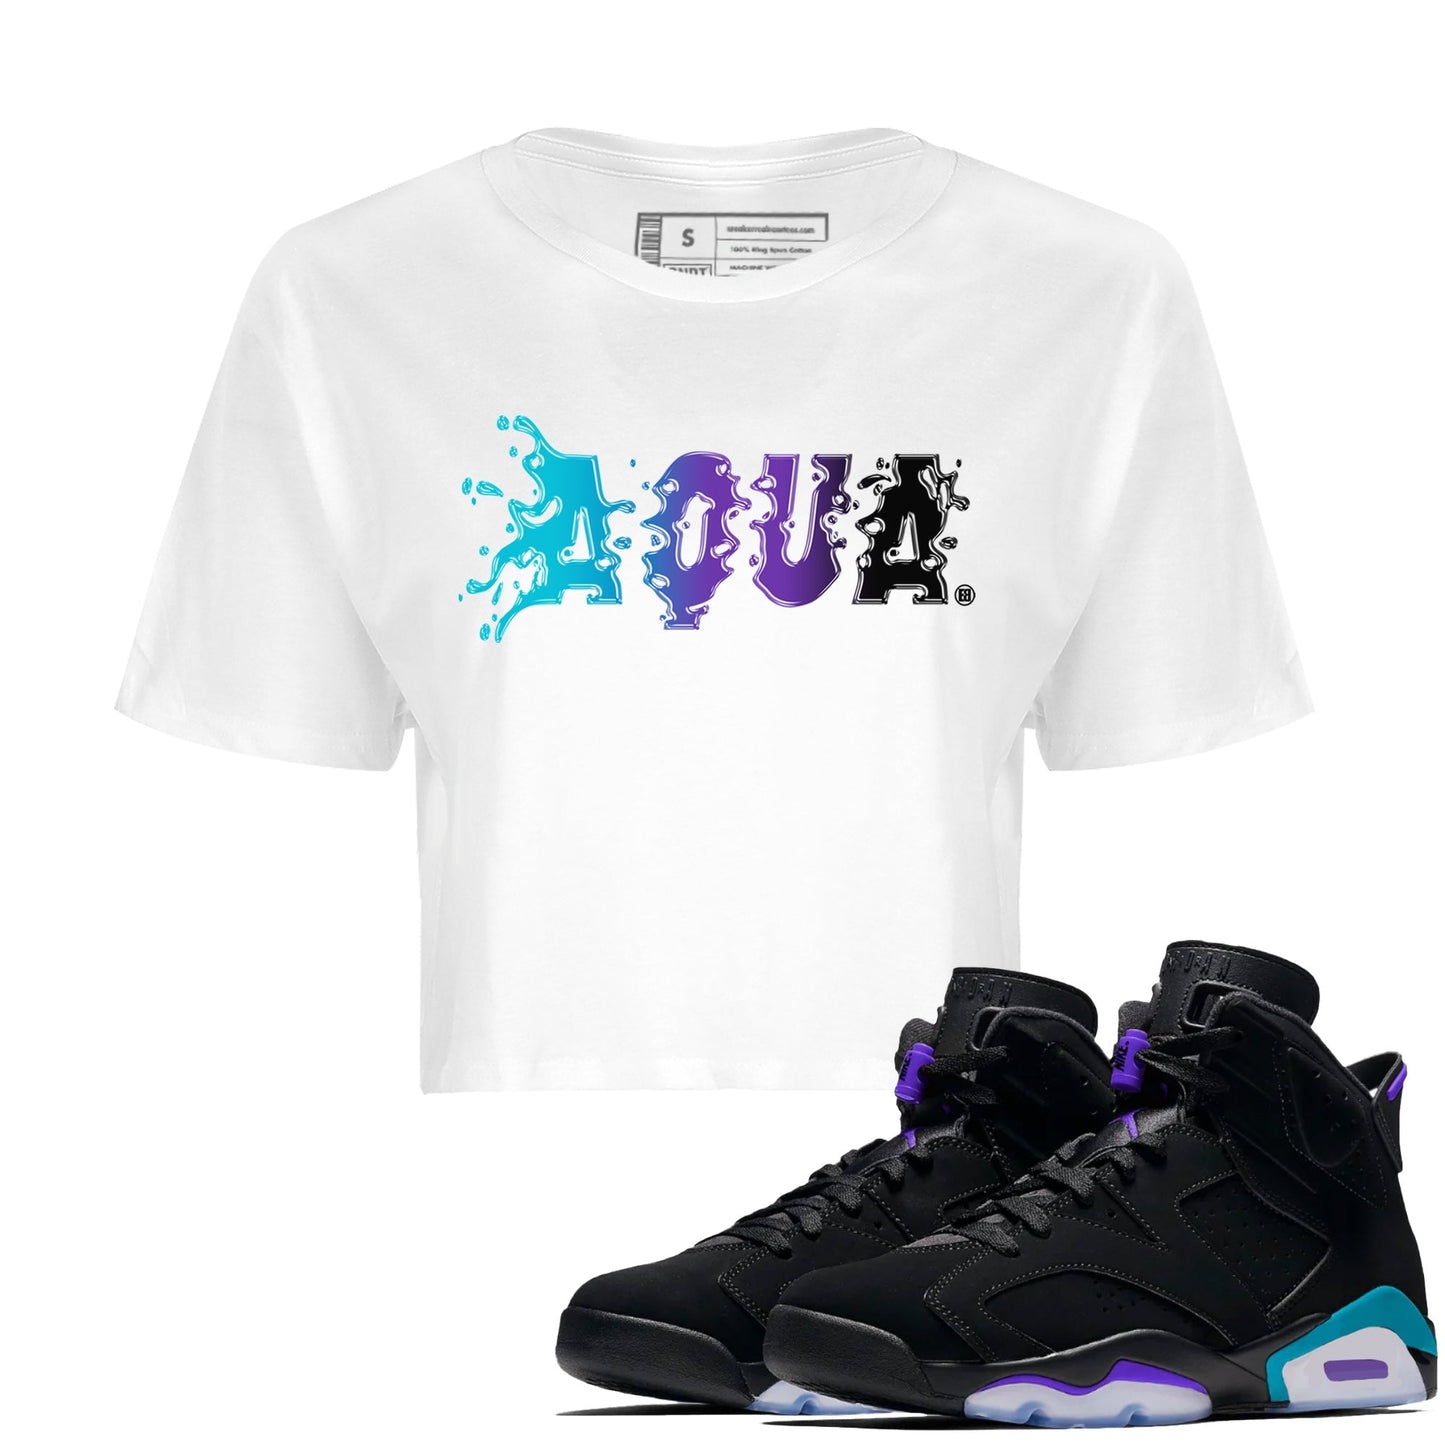 Air Jordan 6 Aqua Sneaker Match Tees Aqua Sneaker Tees AJ6 Aqua Sneaker Release T-Shirt Women's Shirts White 1